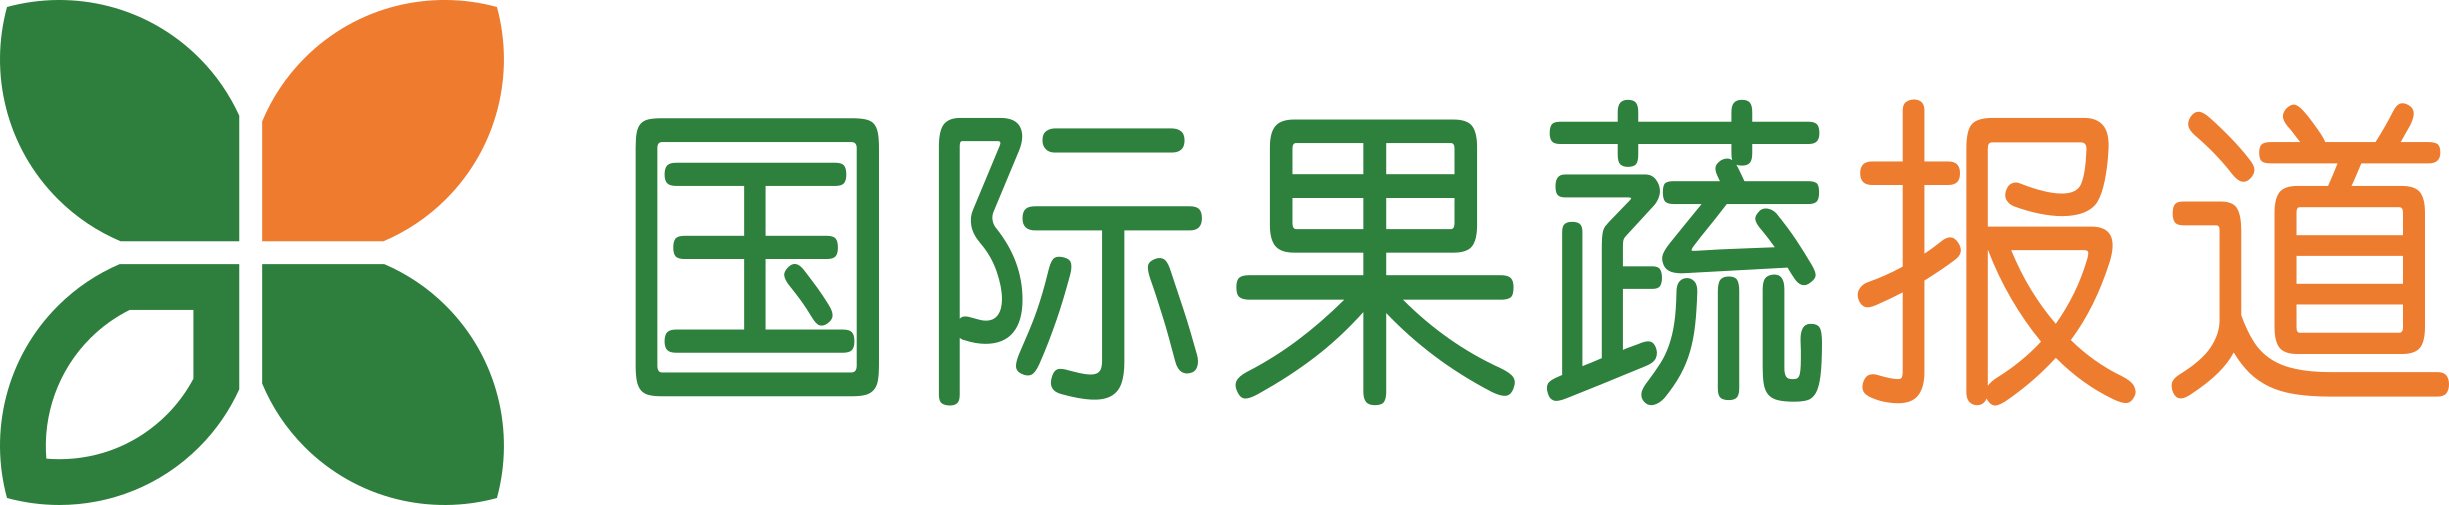 Produce Report logo (zh)